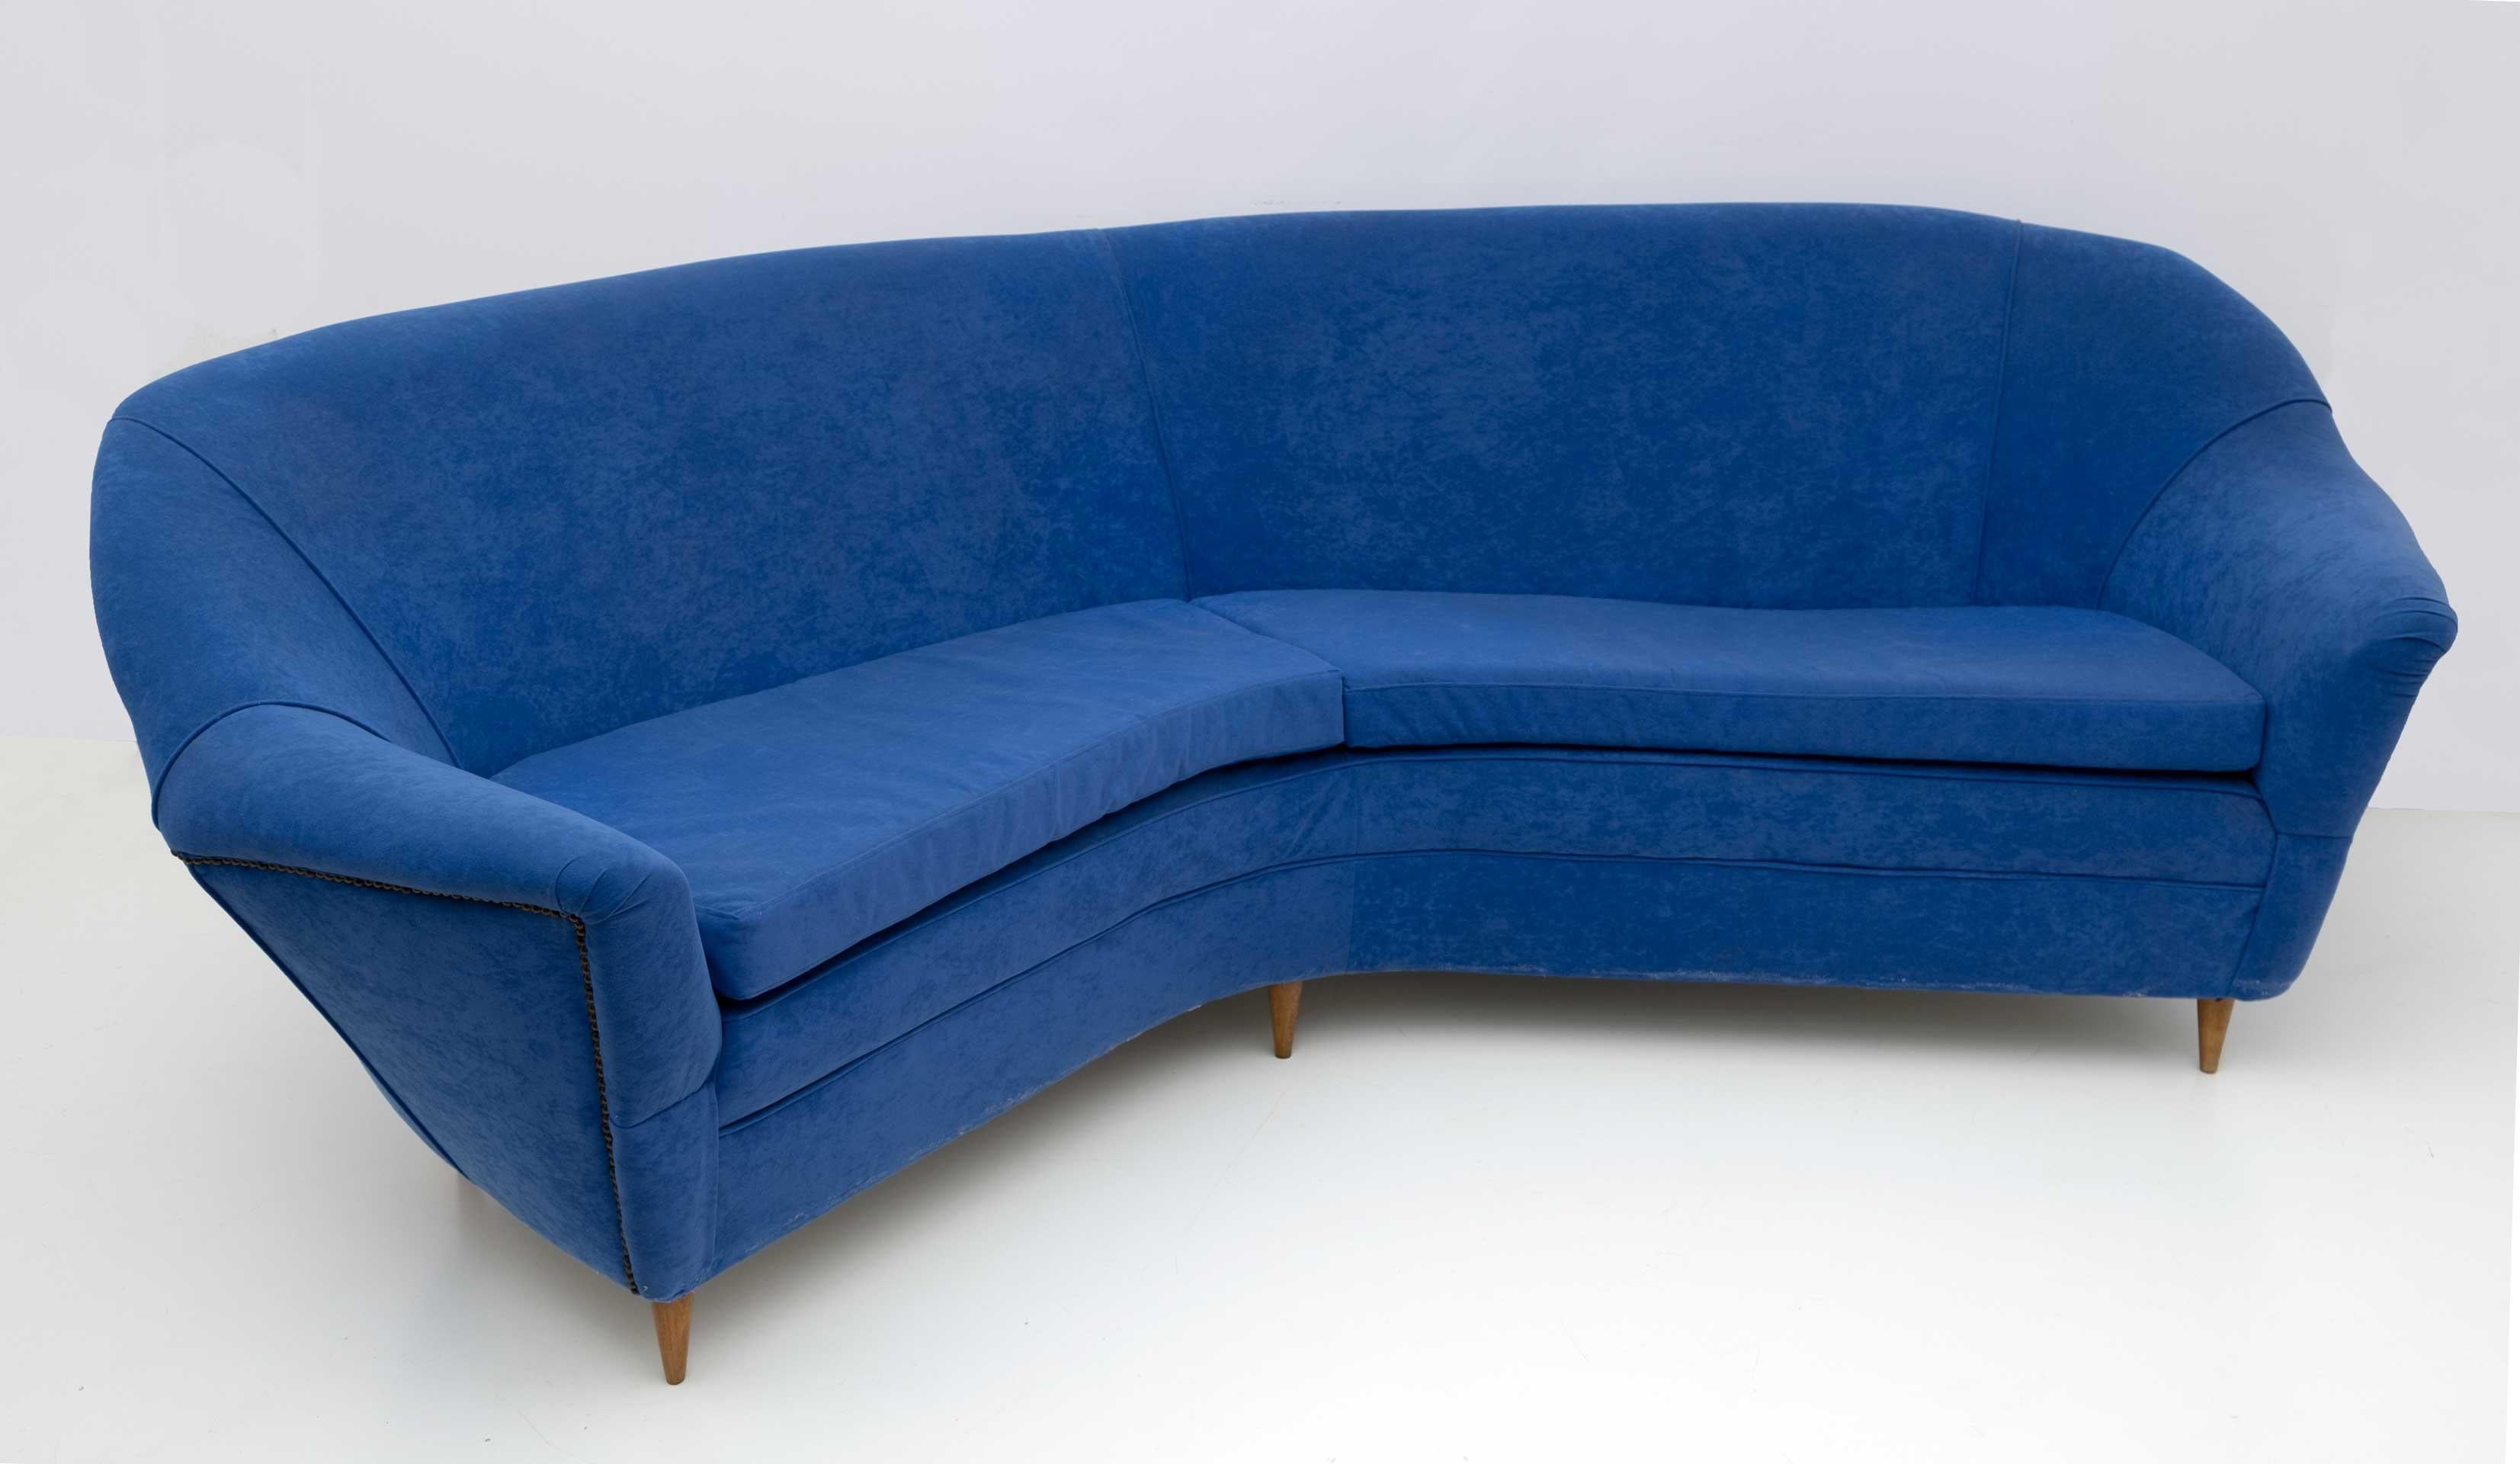 Fabric Ico Parisi Mid-Century Modern Italian Corner Sofa for Ariberto Colombo, 1950s For Sale